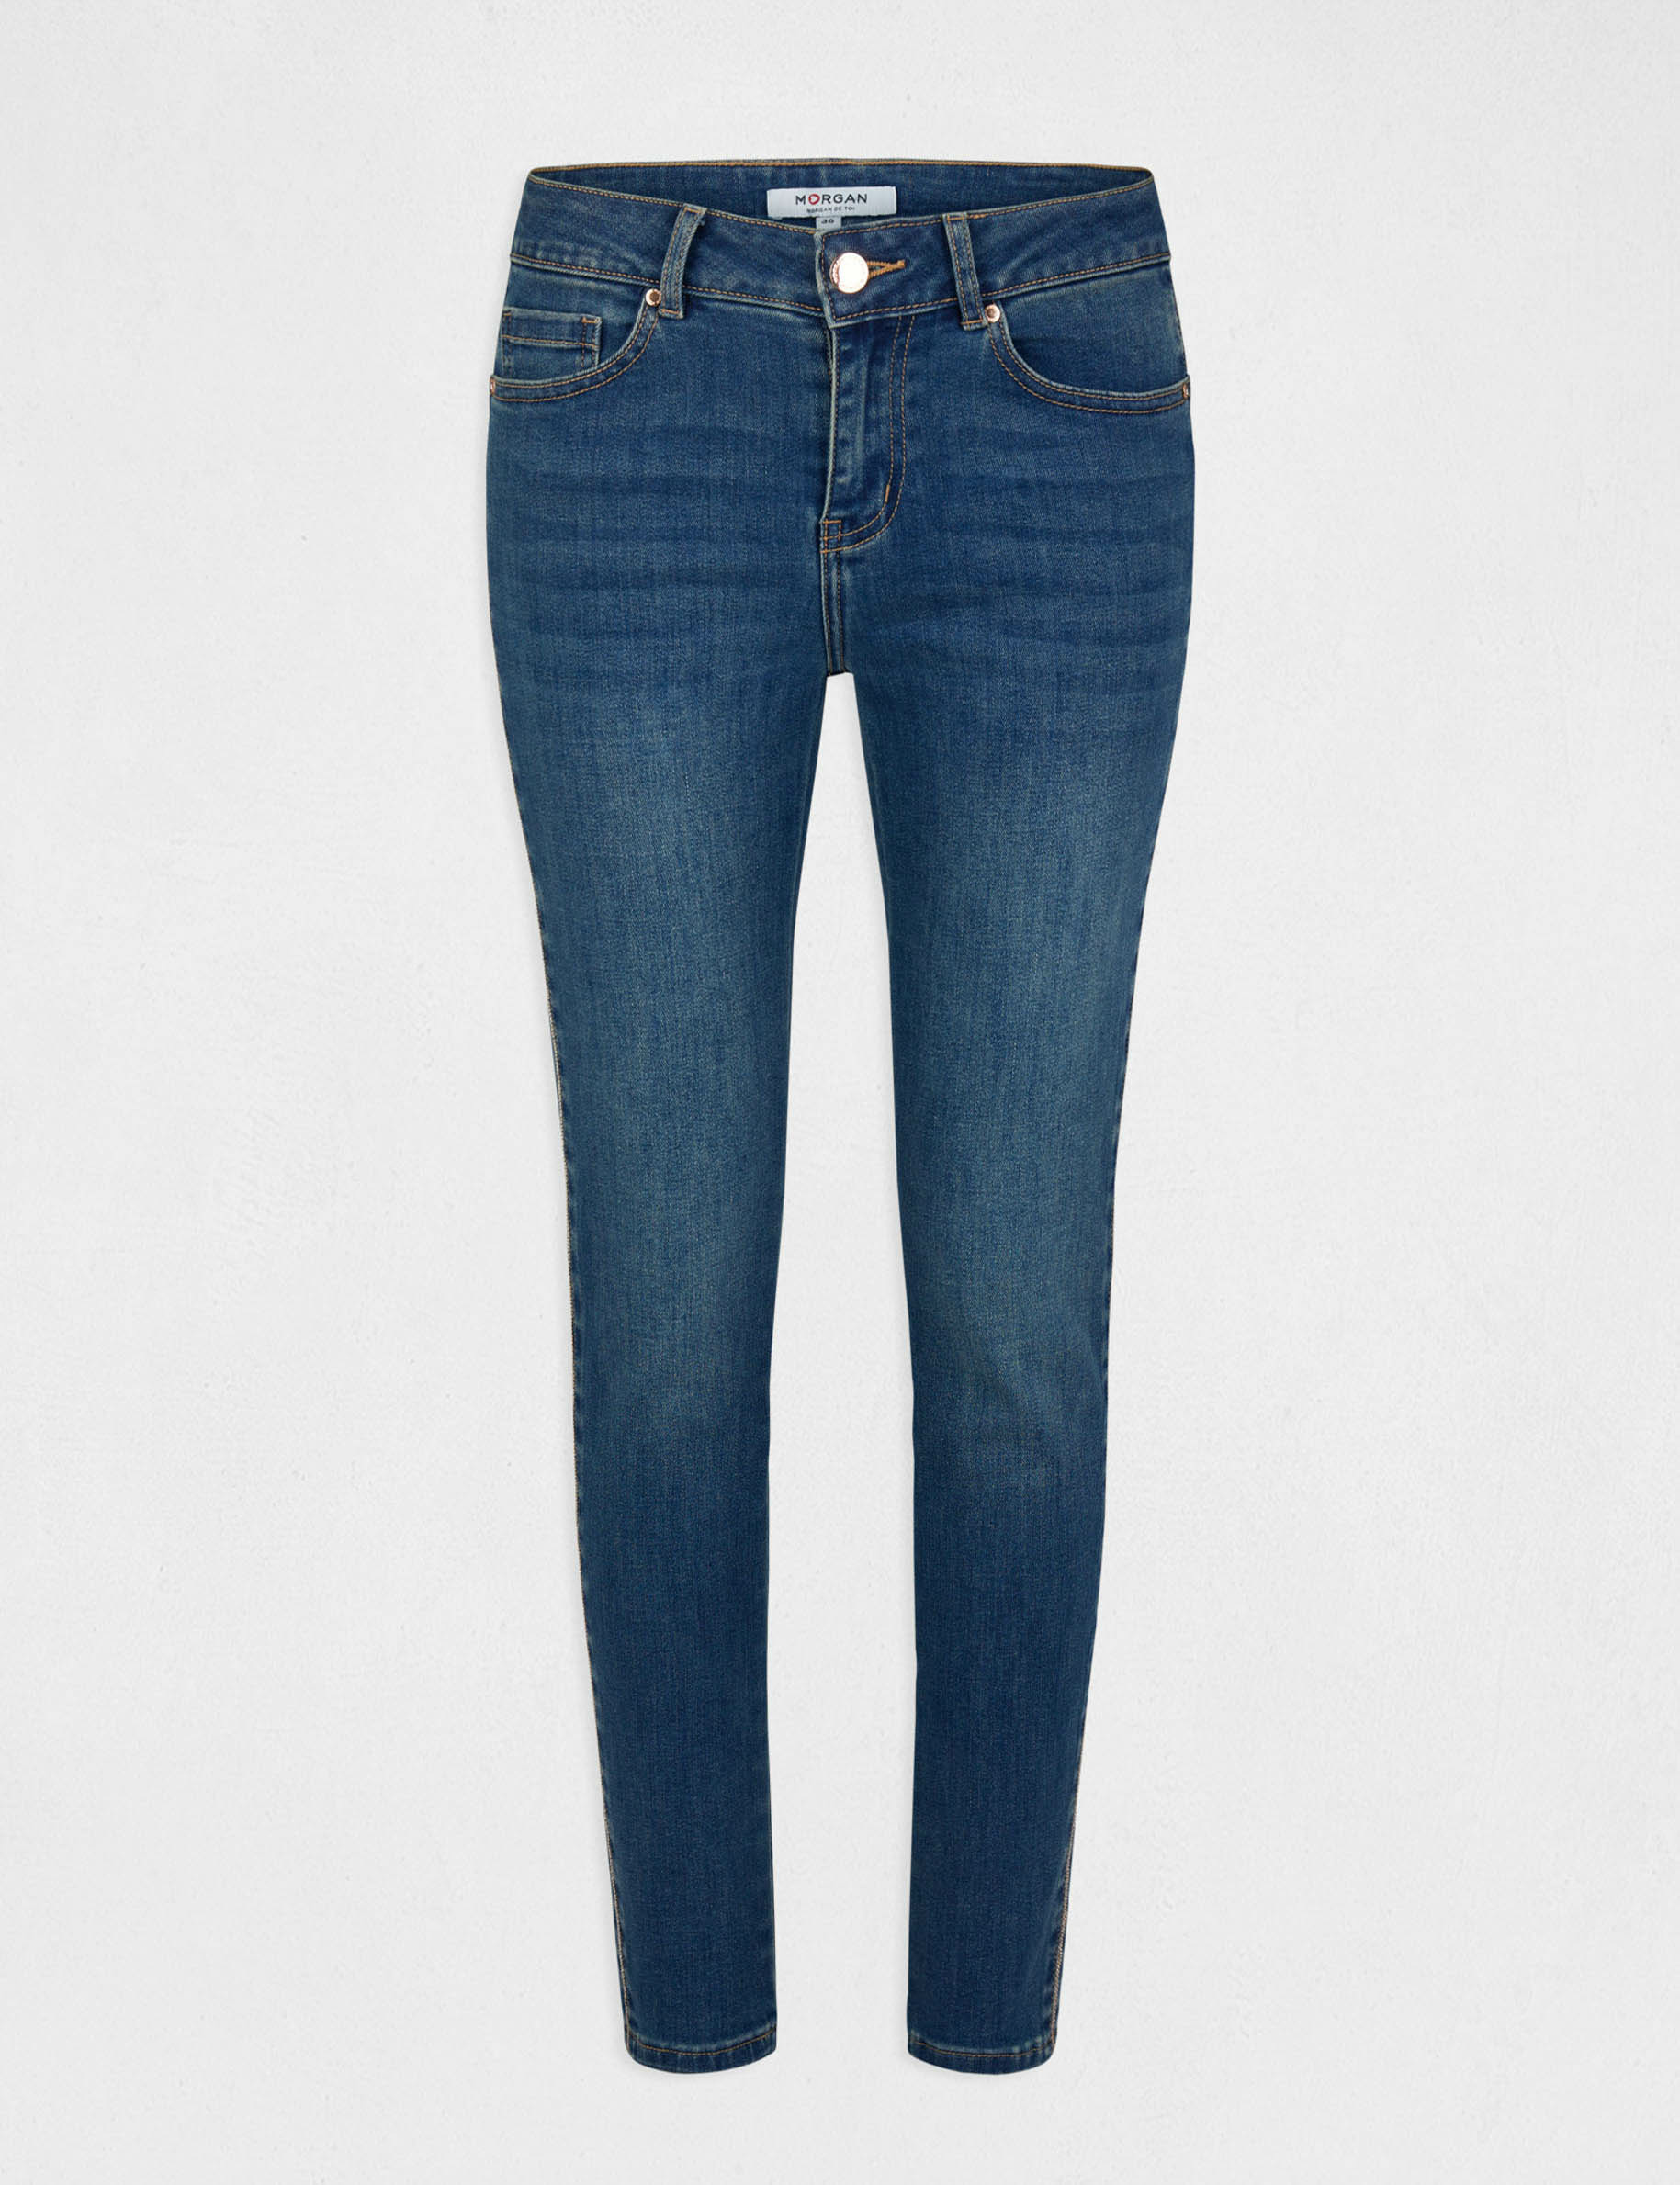 Slim jeans with rhinestones strips stone denim ladies'